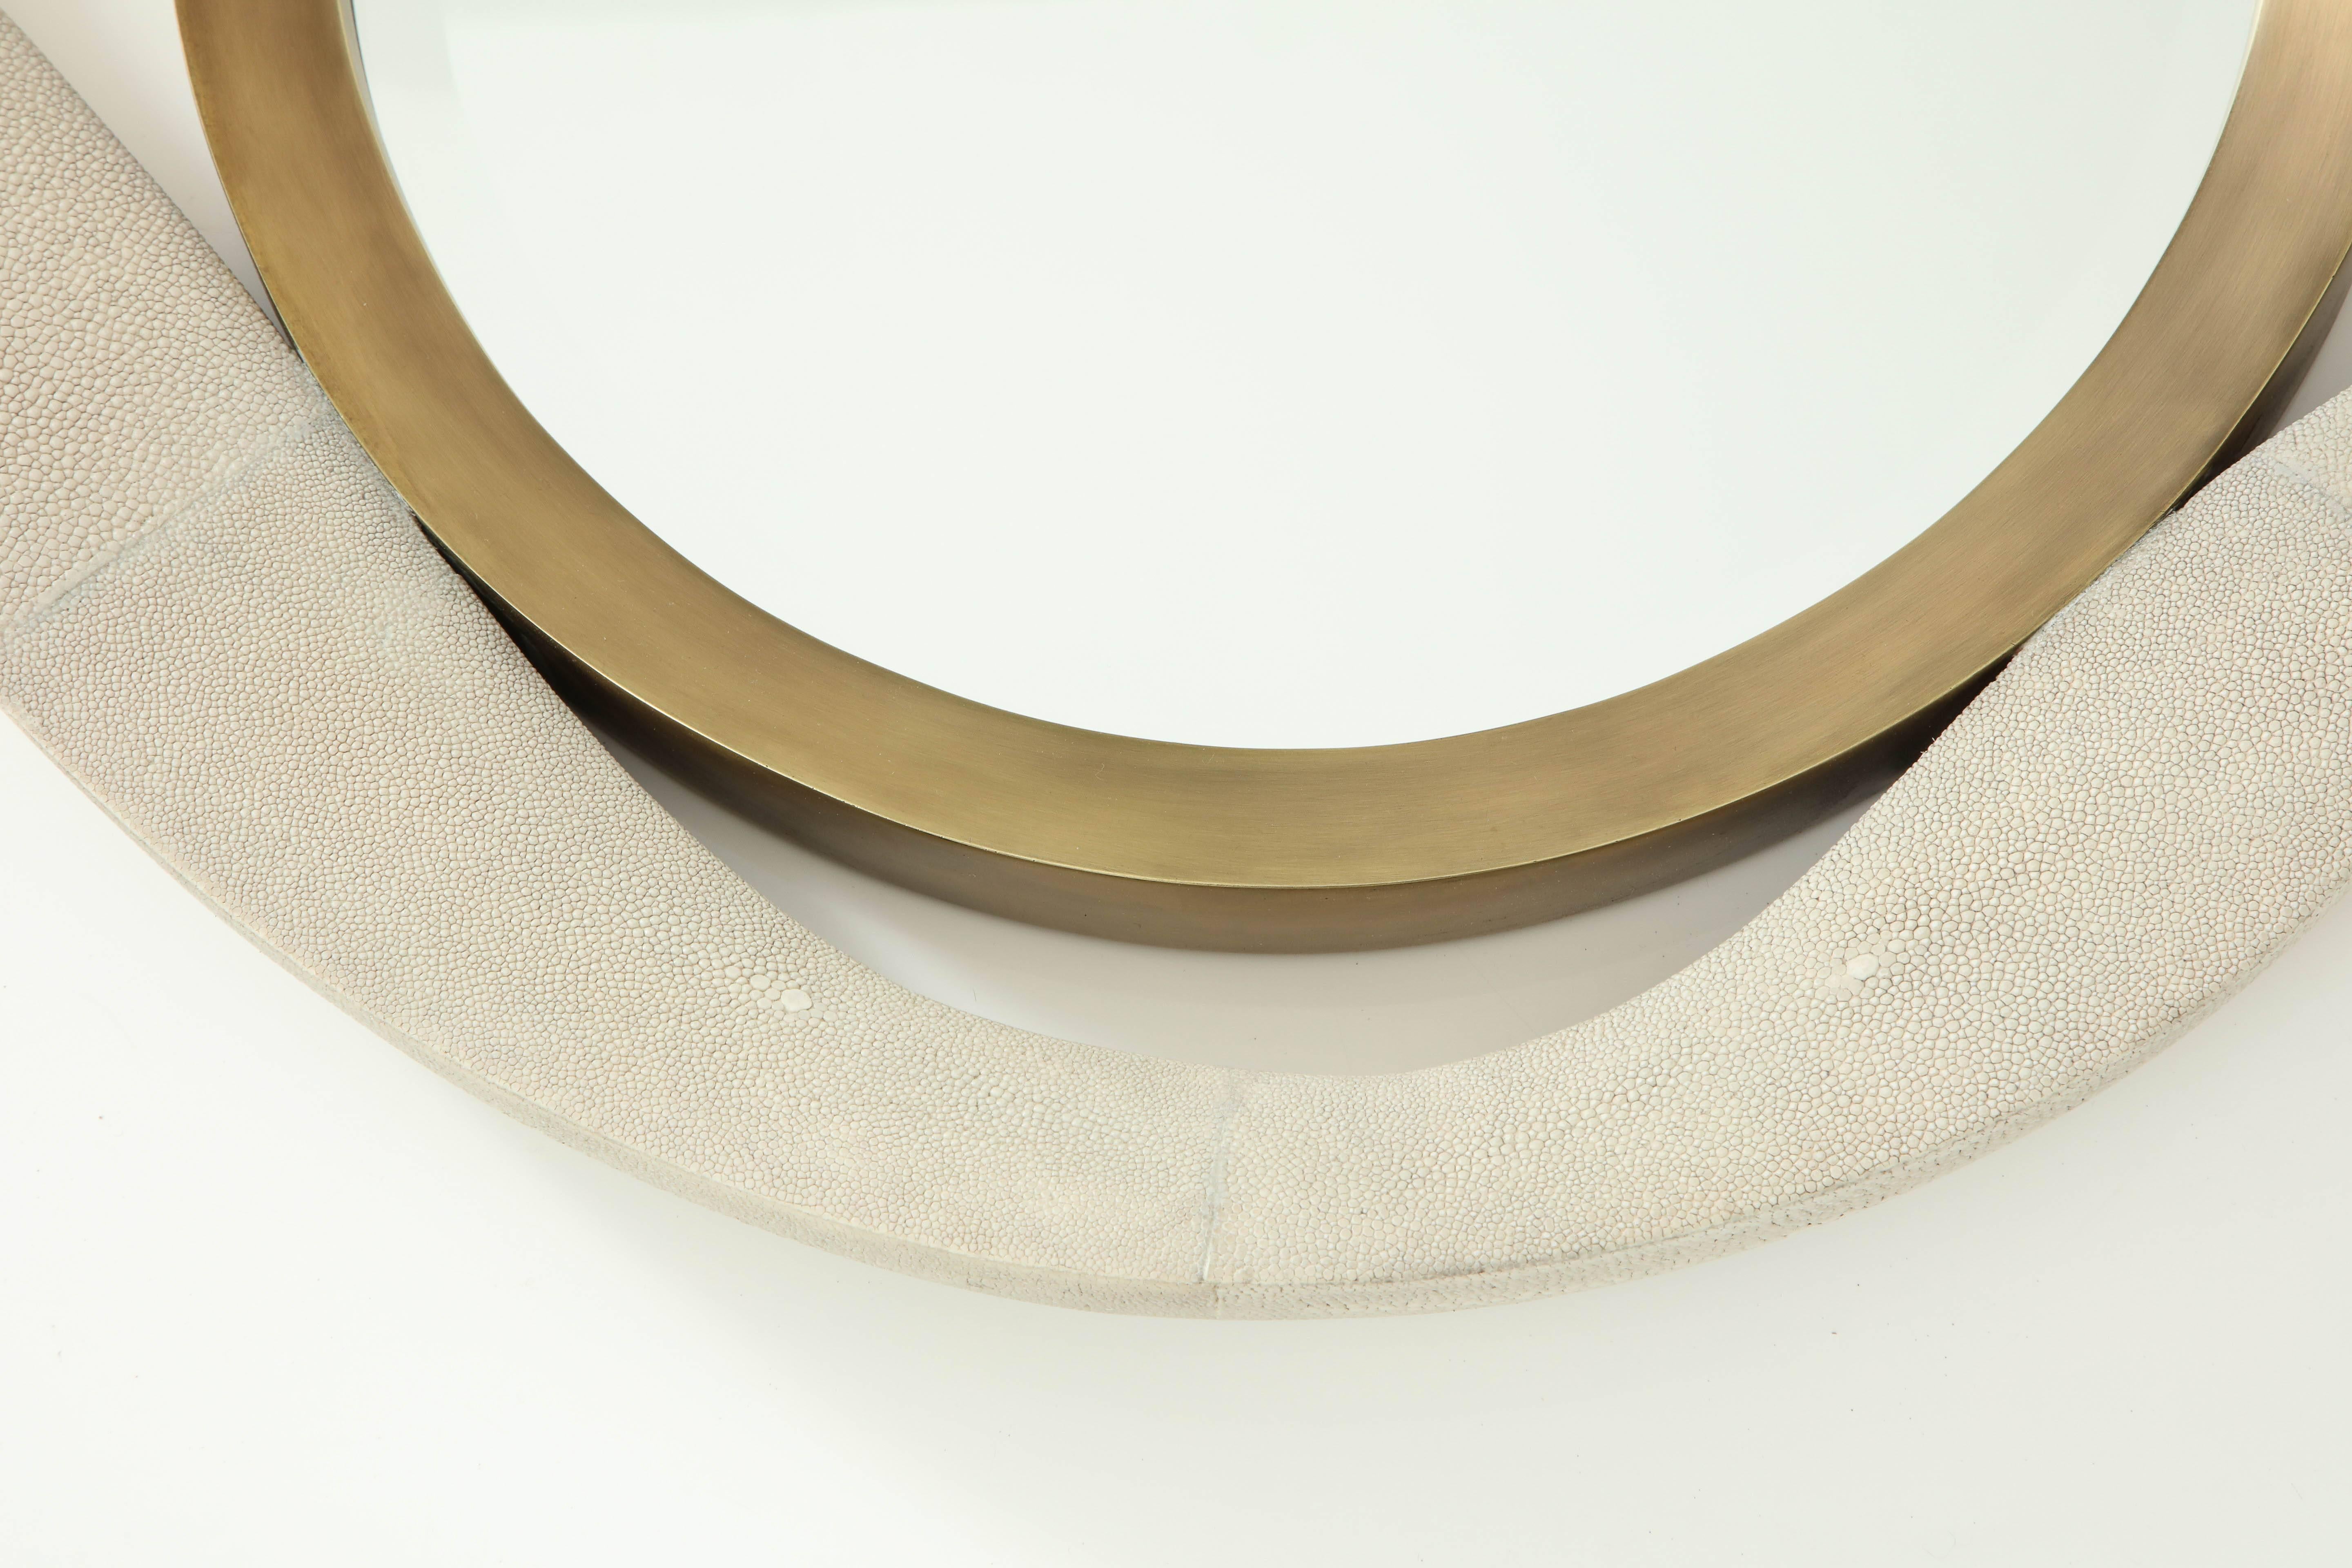 Philippine Shagreen Mirror with Brass Details, Cream Color Shagreen, Contemporary, Round